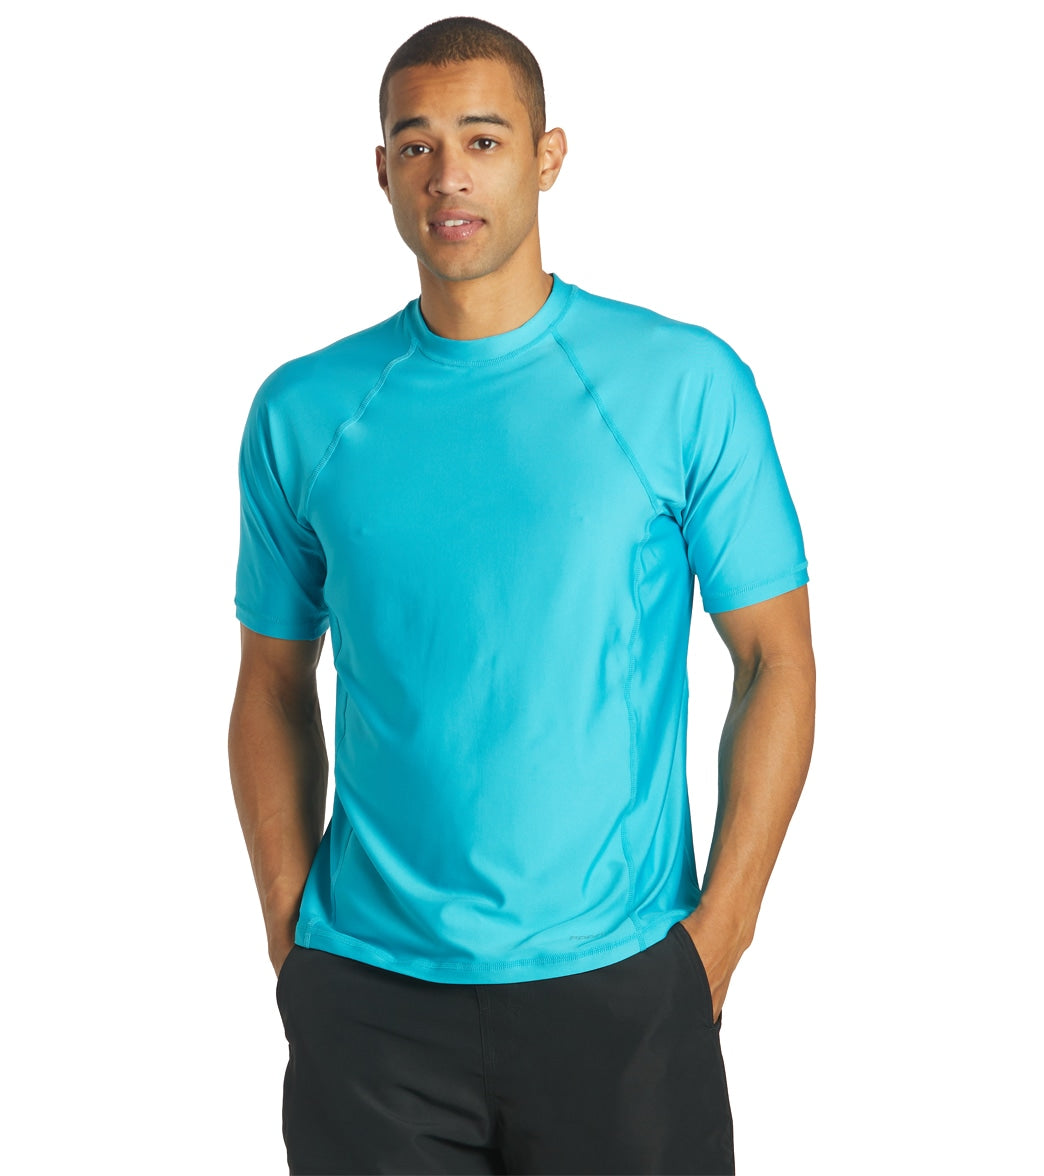 Sporti Men's Short Sleeve Shirt Upf 50+ Comfort Fit Rashguard - Ocean Blue Large - Swimoutlet.com